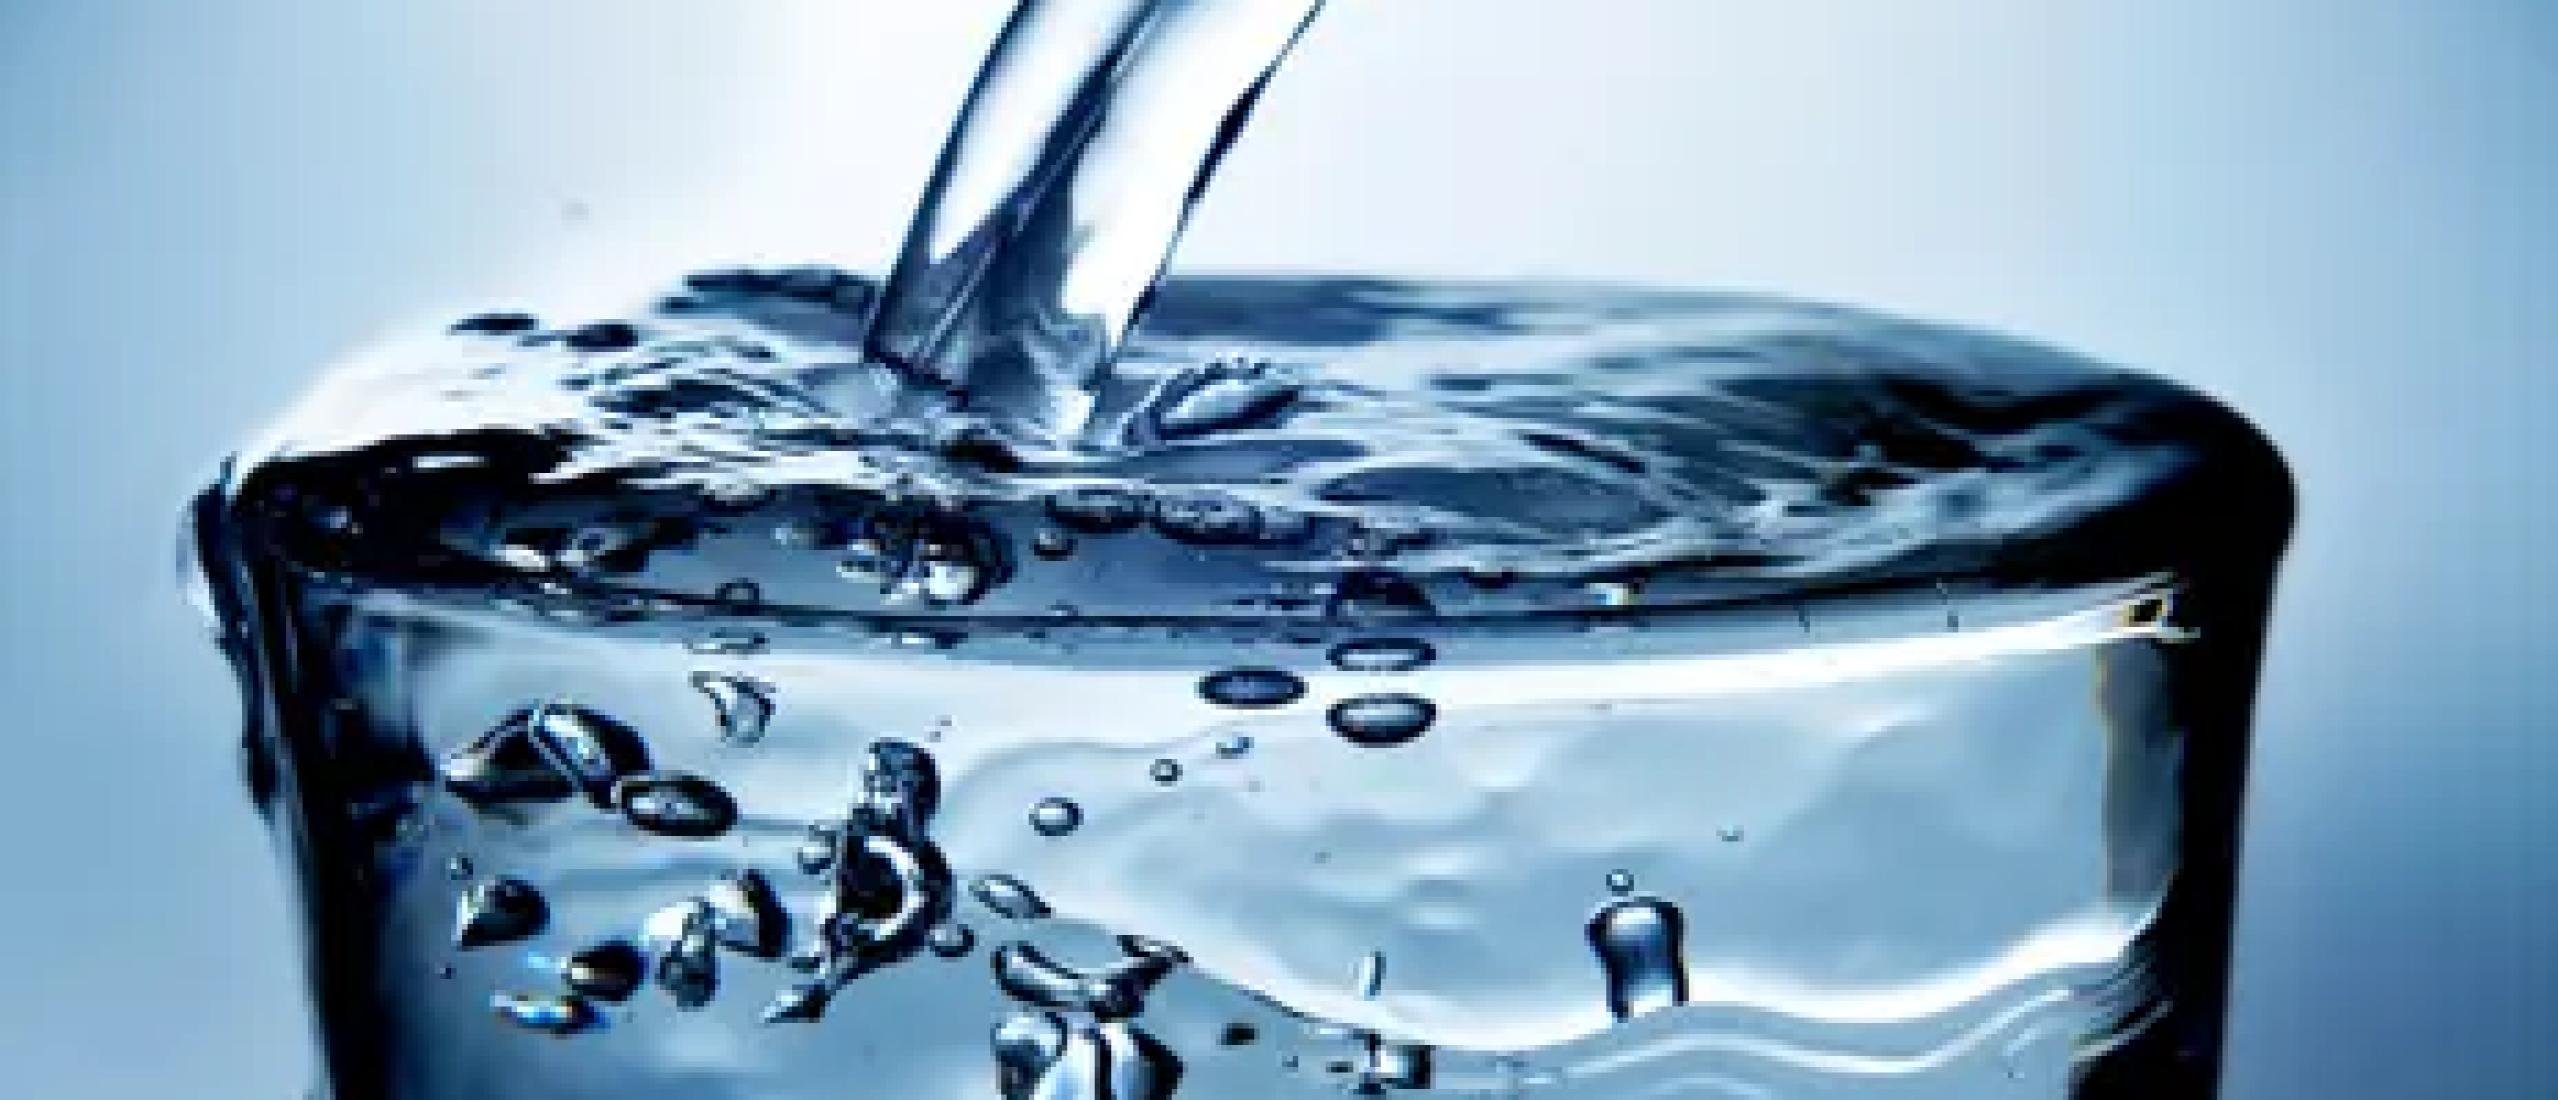 GBLT erkent slechte drinkwaterkwaliteit